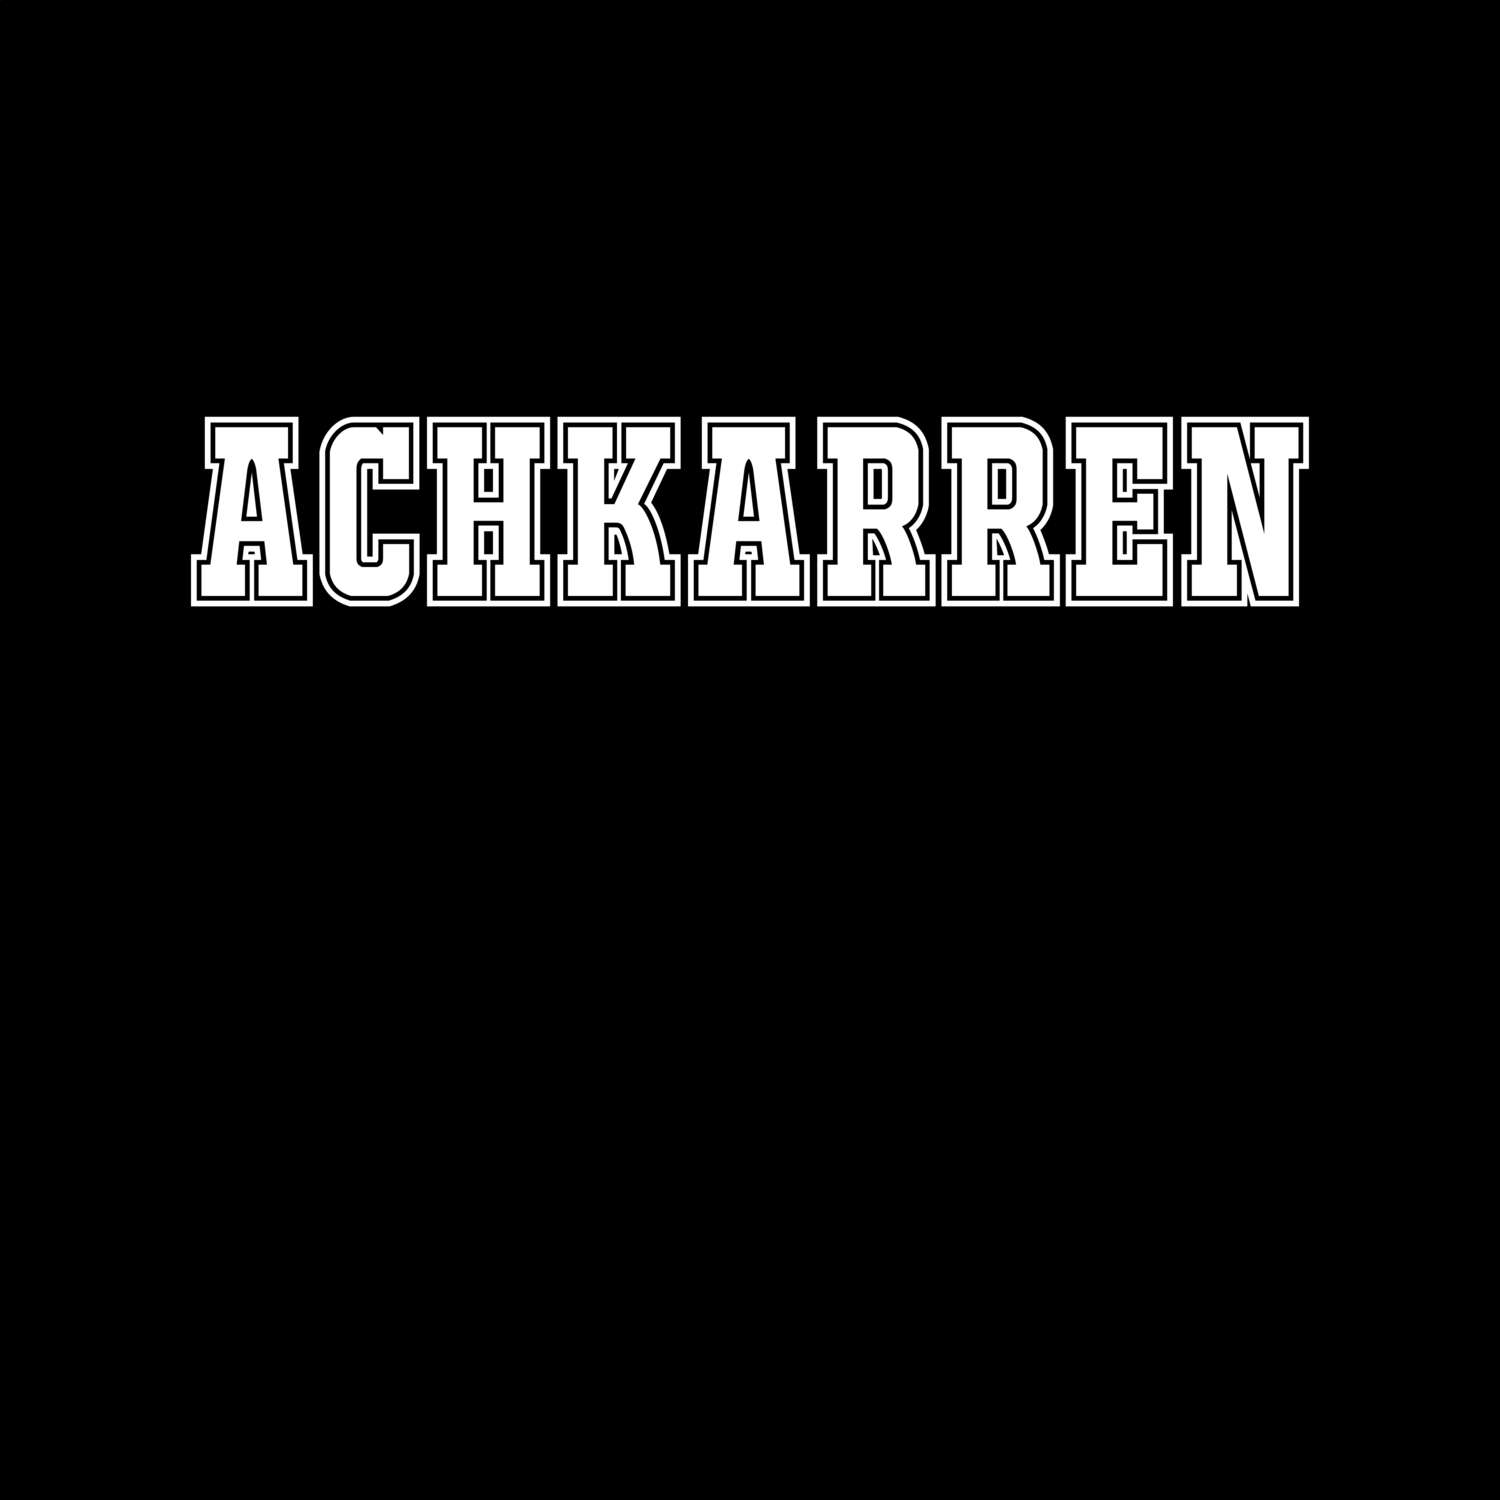 Achkarren T-Shirt »Classic«